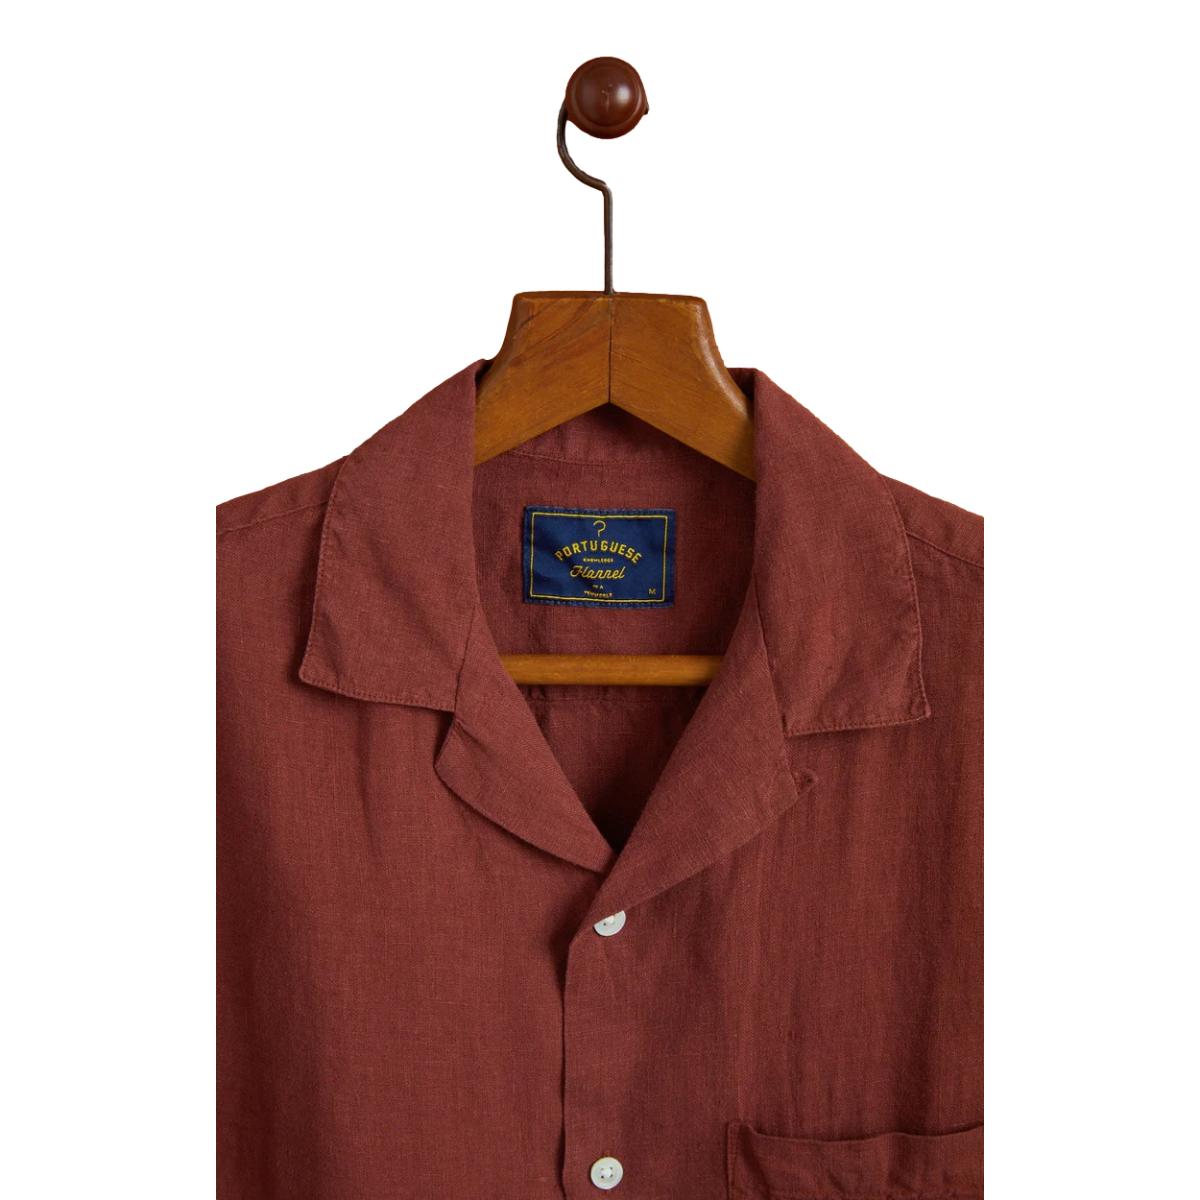 Linen Camp Shirt Bordeaux - Shirts